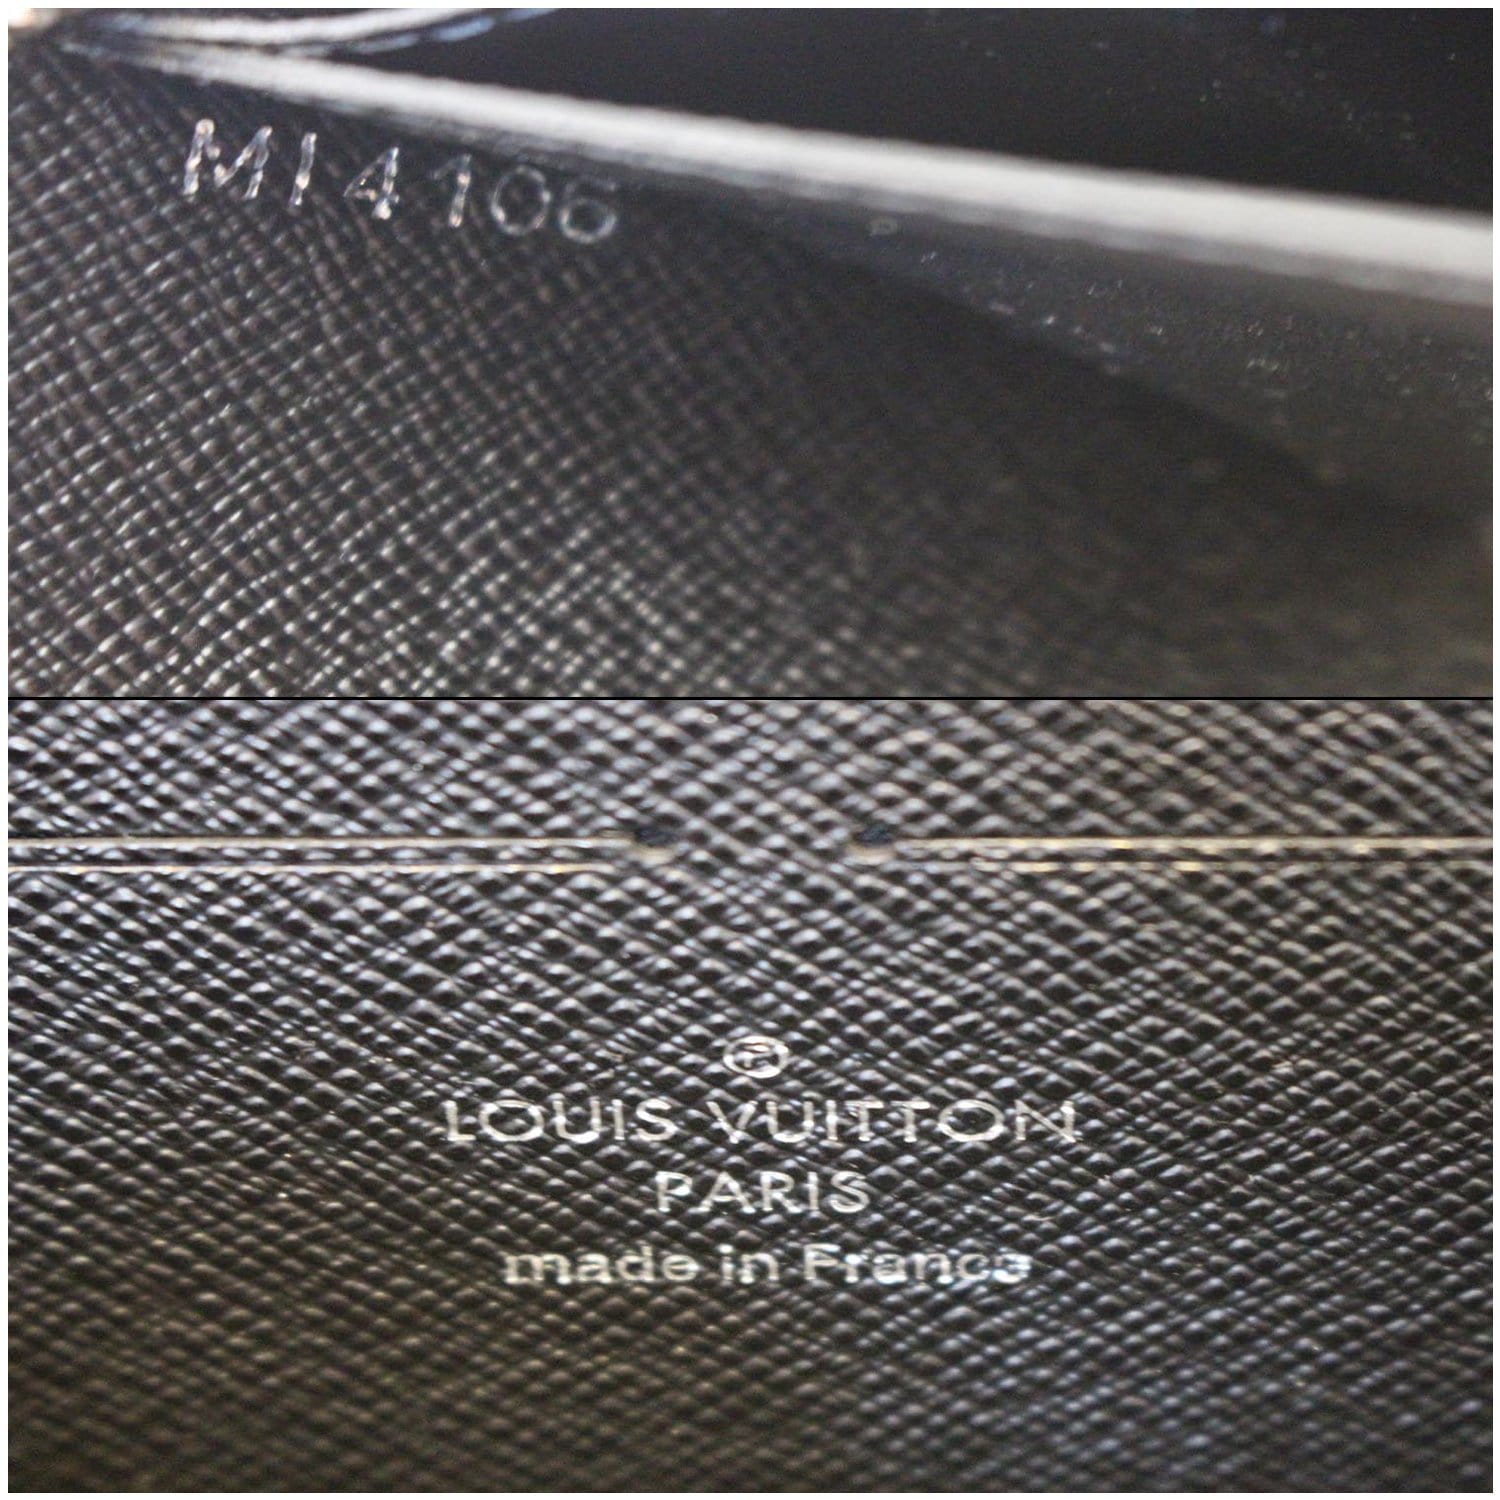 Clémence Wallet - Luxury Epi Leather Black